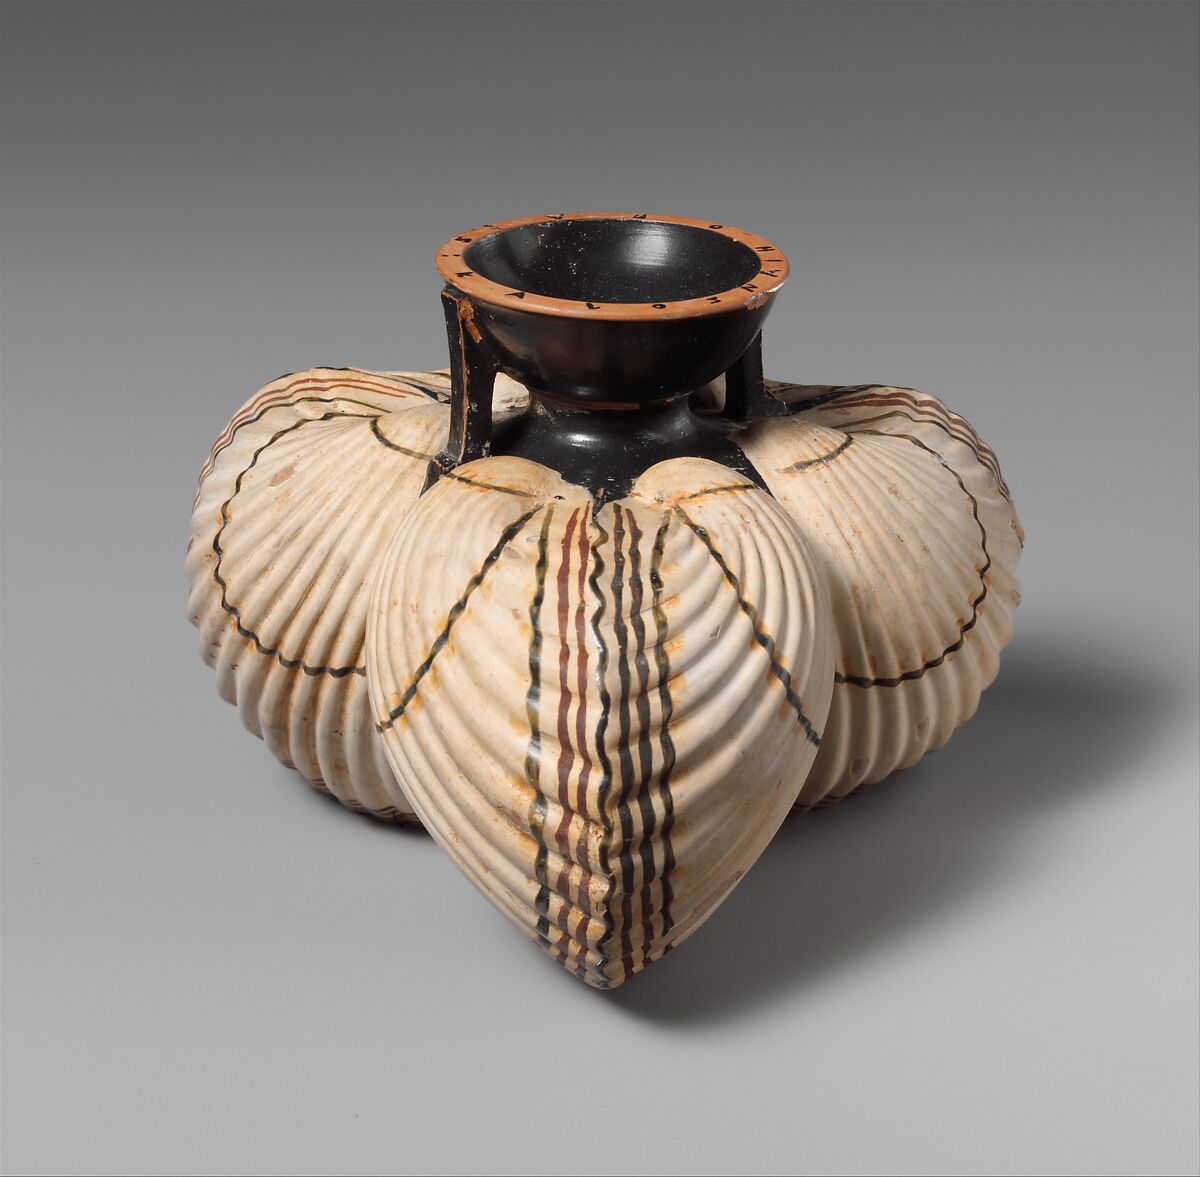 Terracotta aryballos (oil flask) in the form of three cockleshells, Terracotta, Greek, Attic 